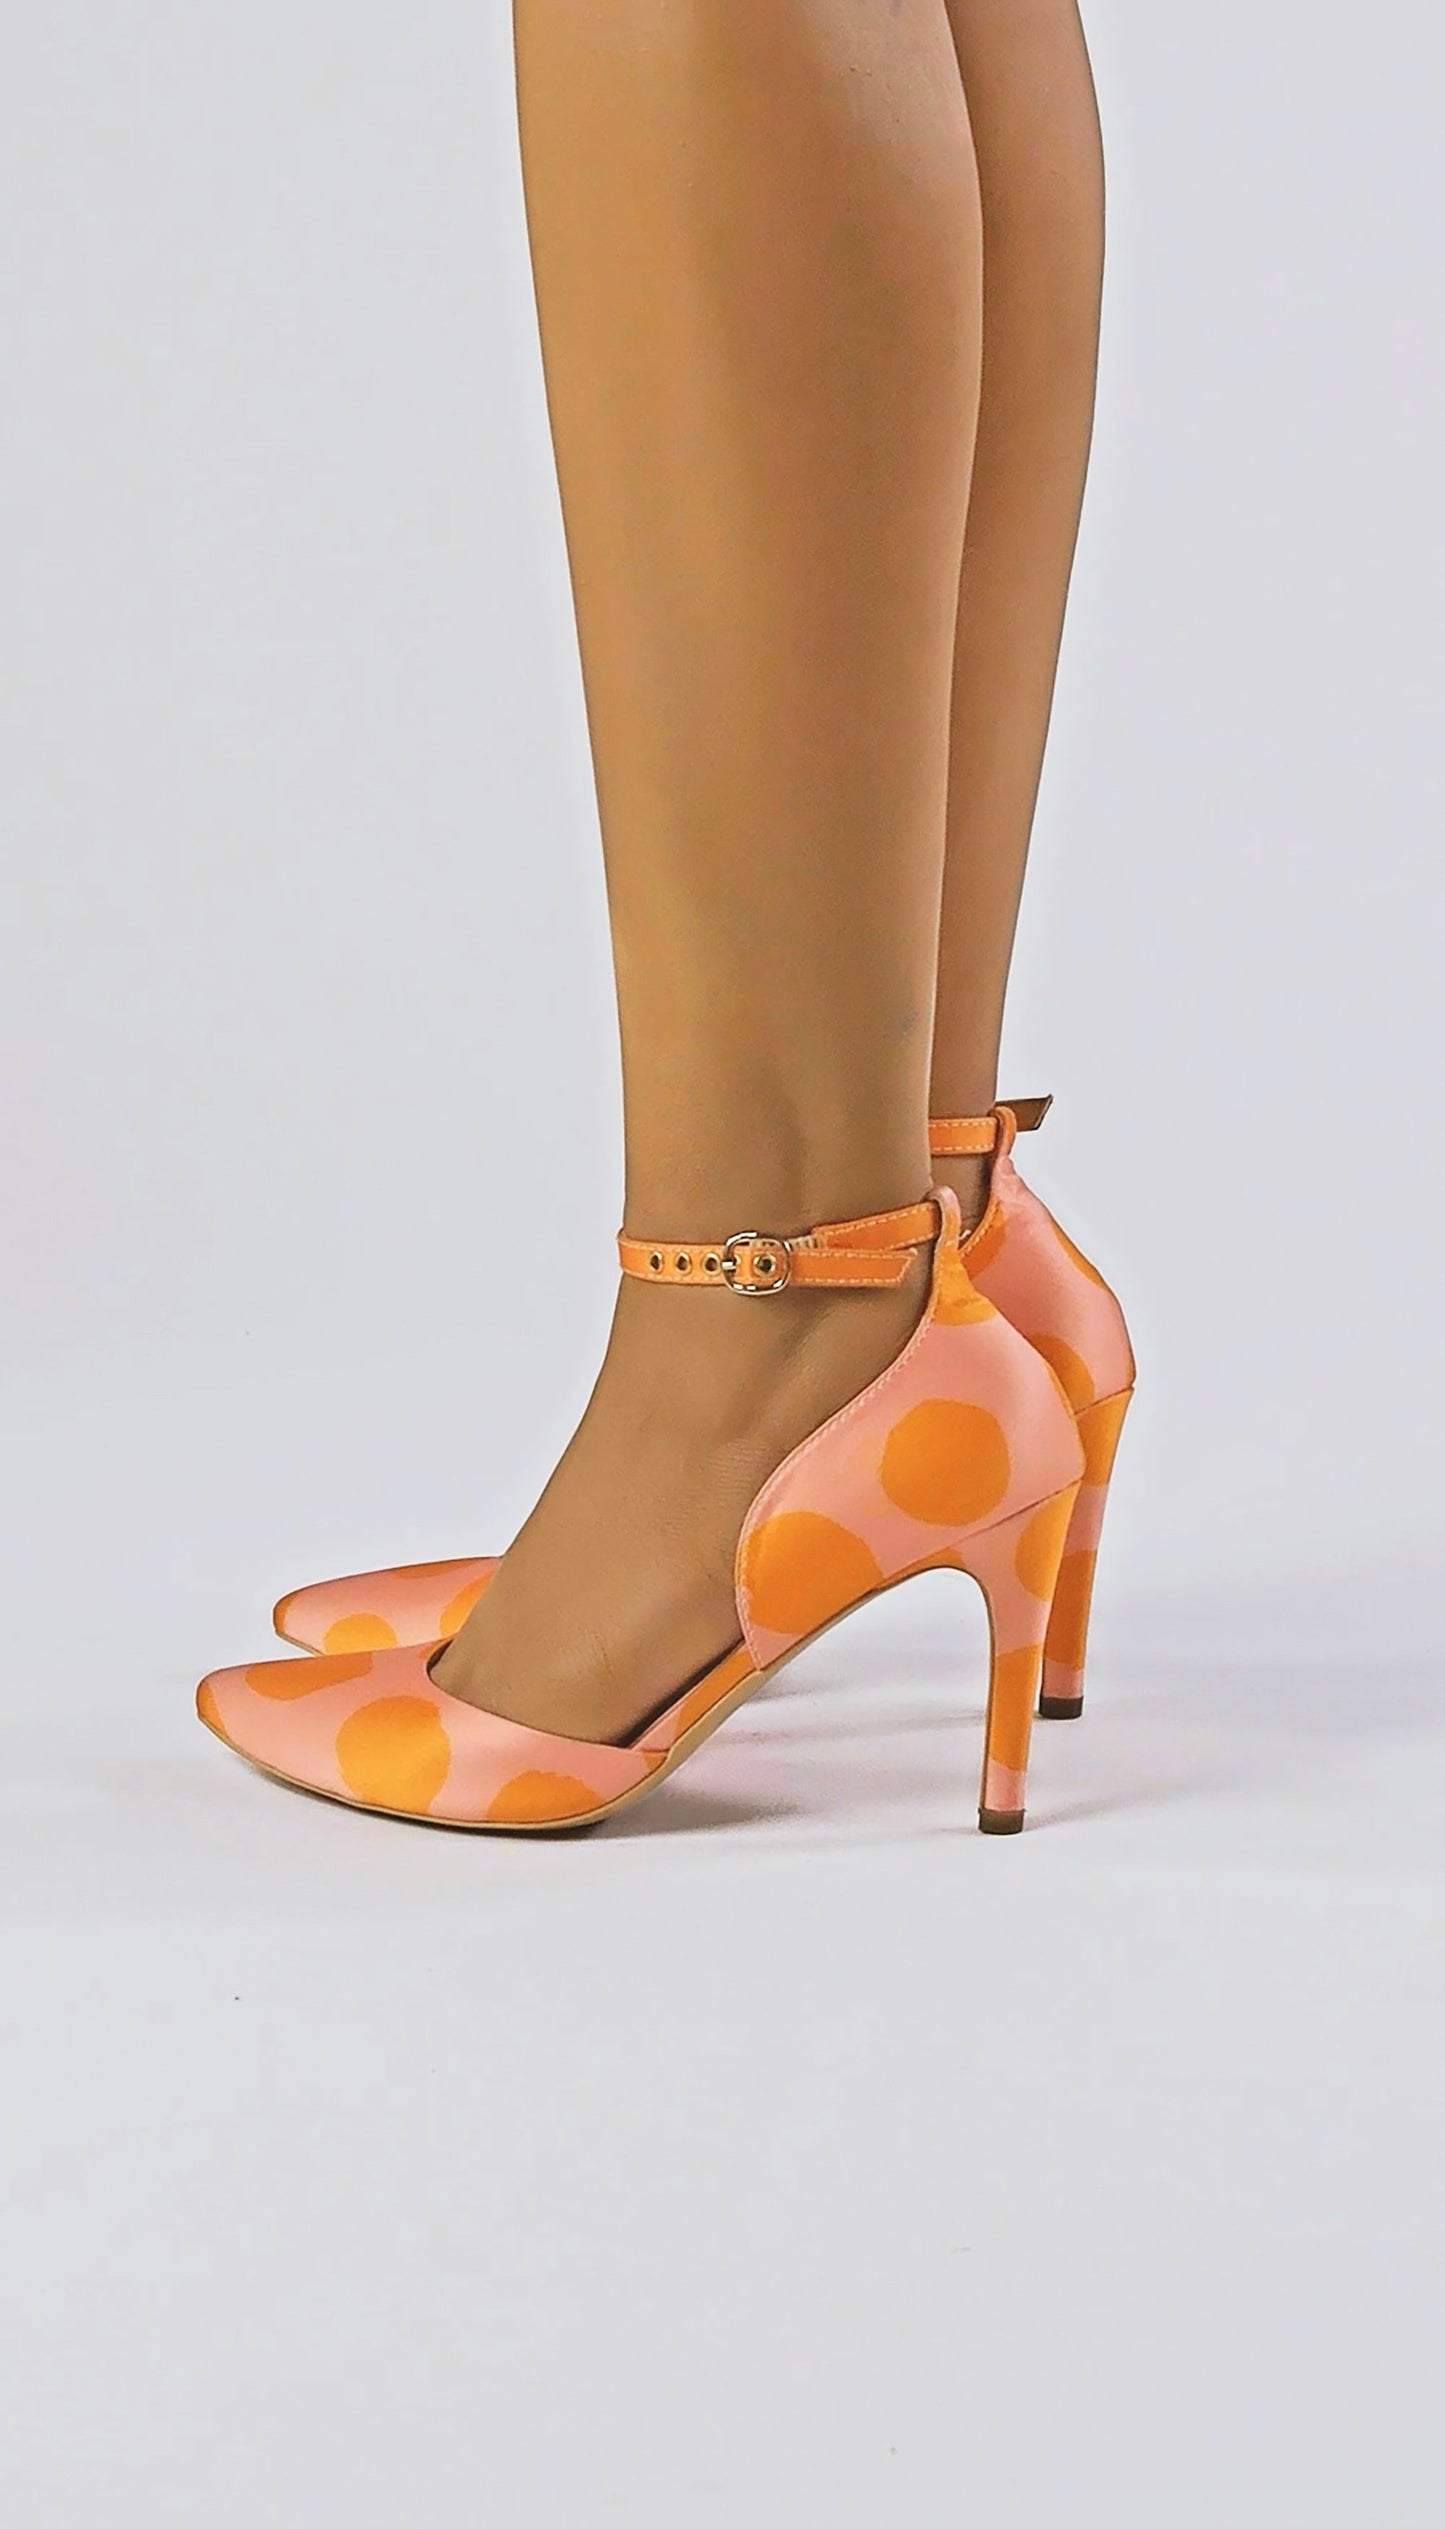 DJ Tangerine - Multicoloured Pointed Stilettos